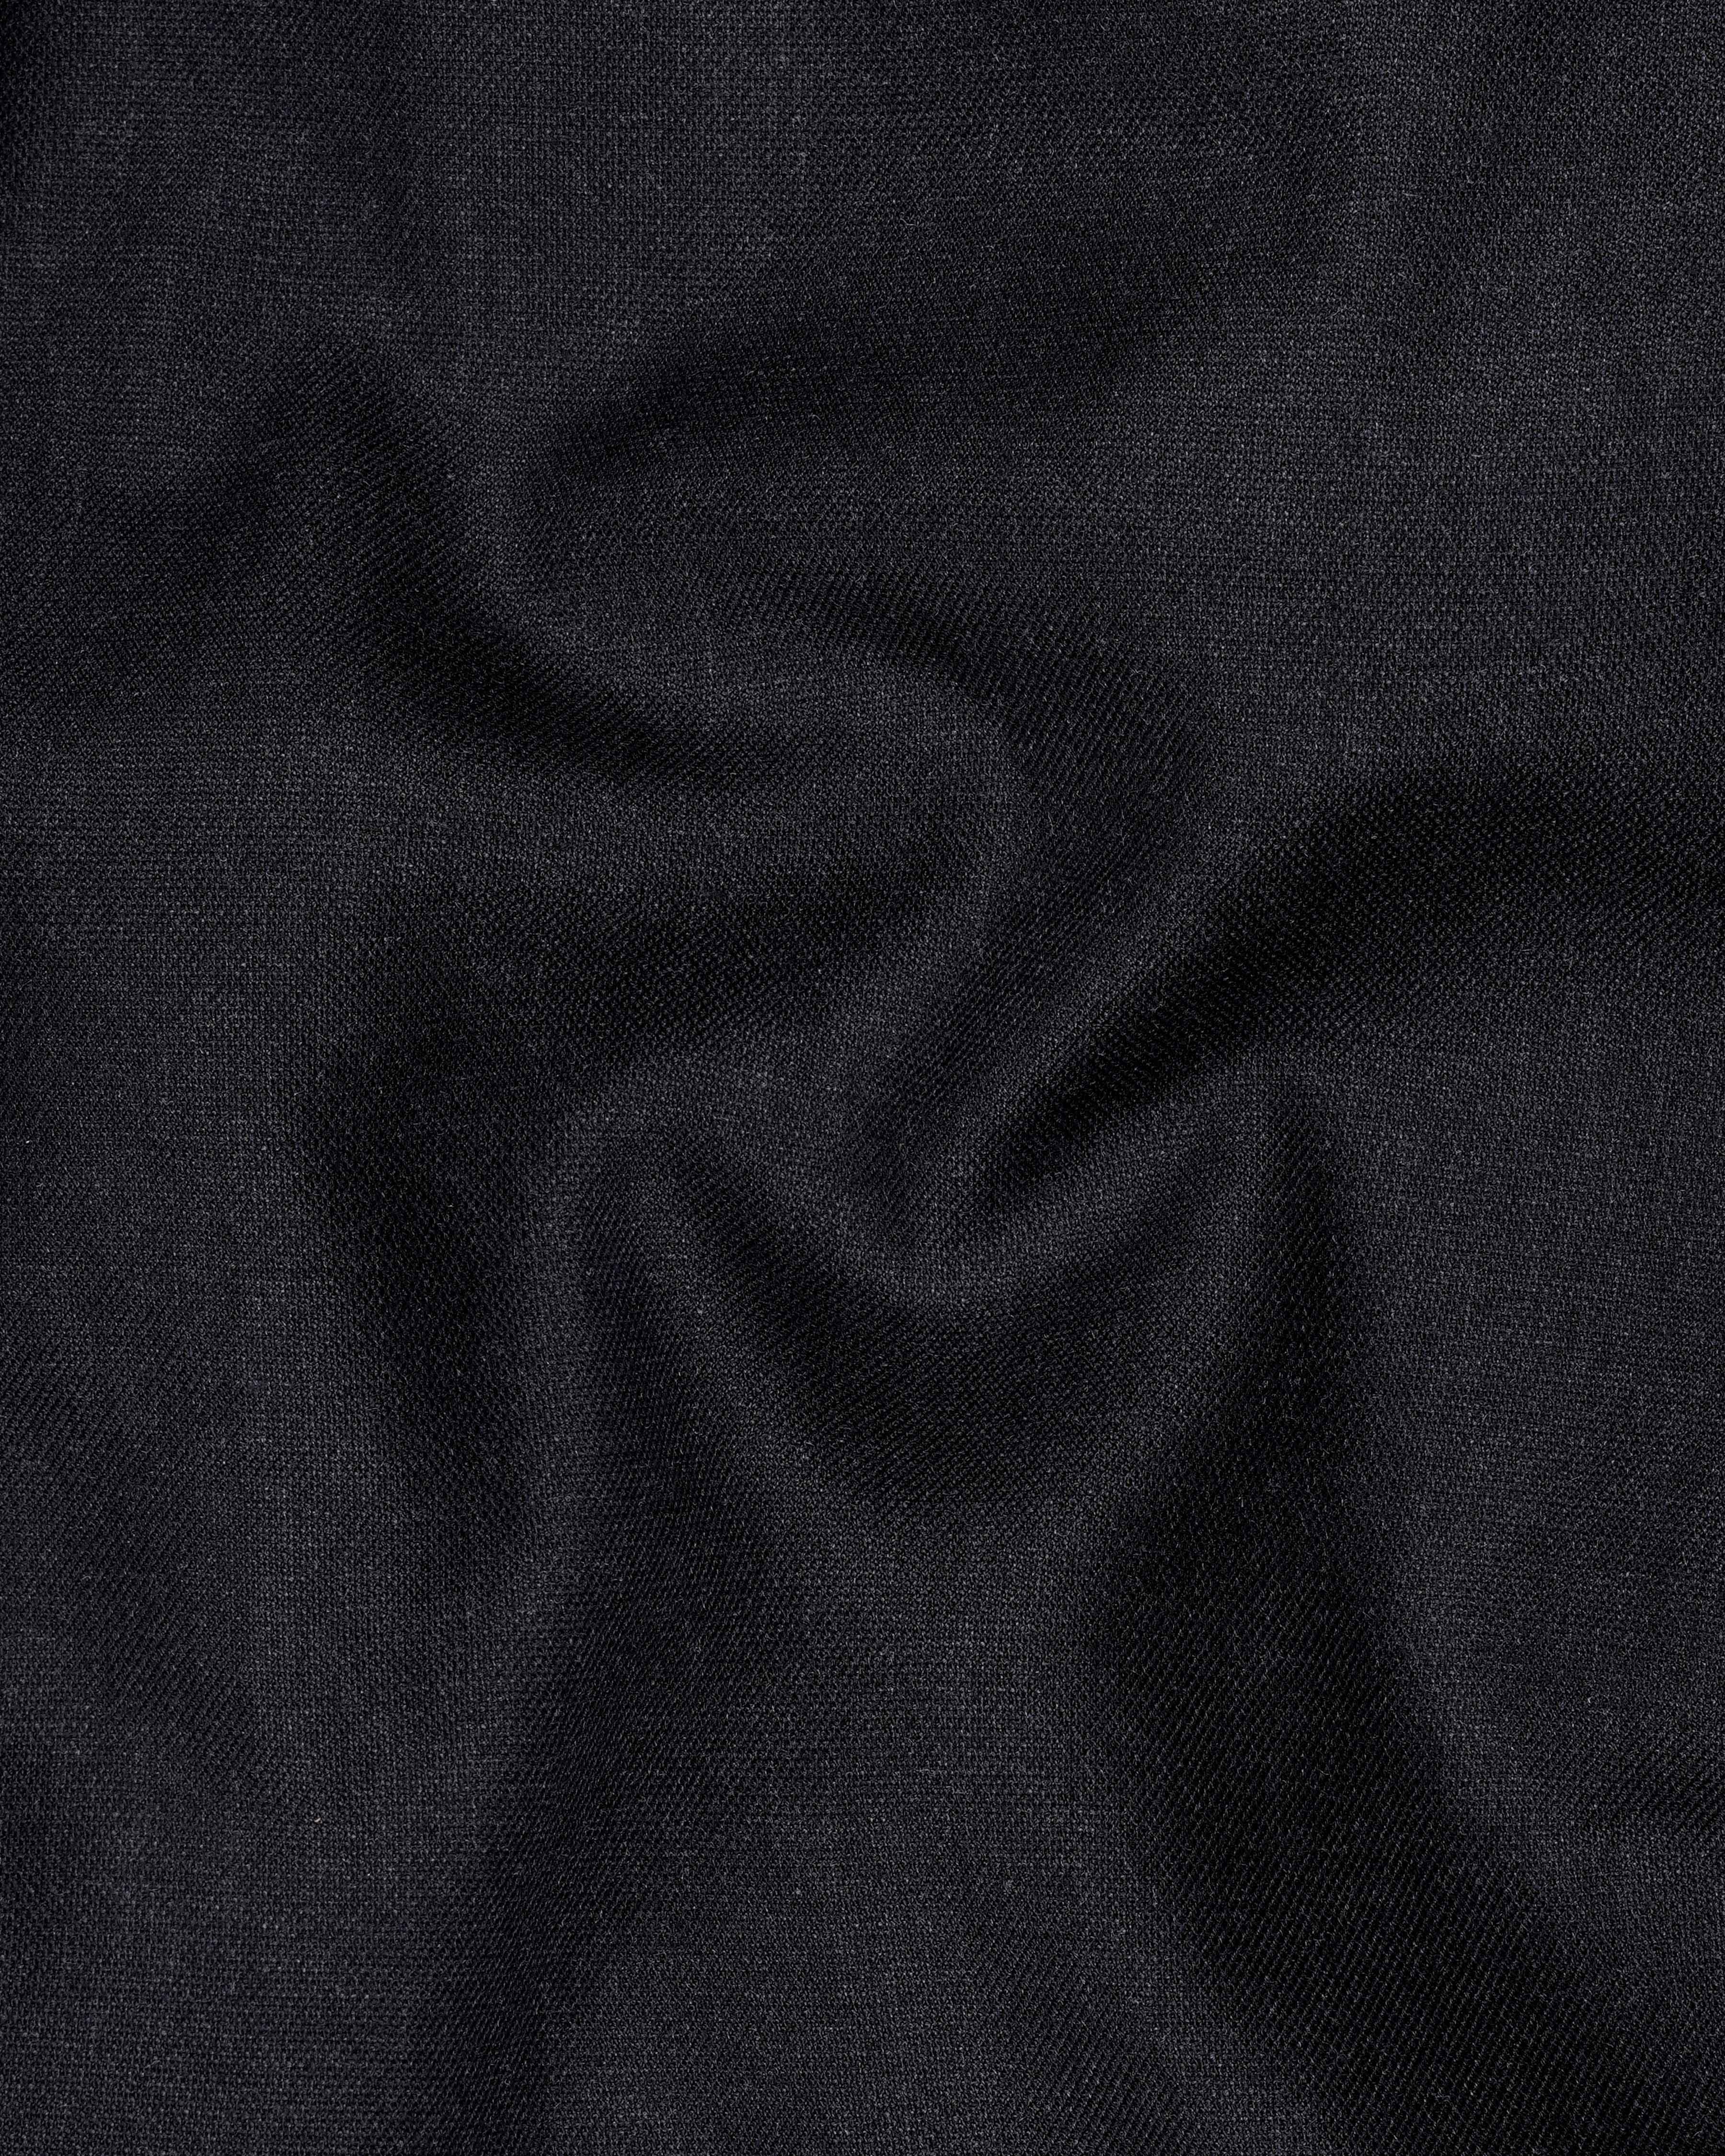 Mirage Black Textured Pant T2052-28, T2052-30, T2052-32, T2052-34, T2052-36, T2052-38, T2052-40, T2052-42, T2052-44